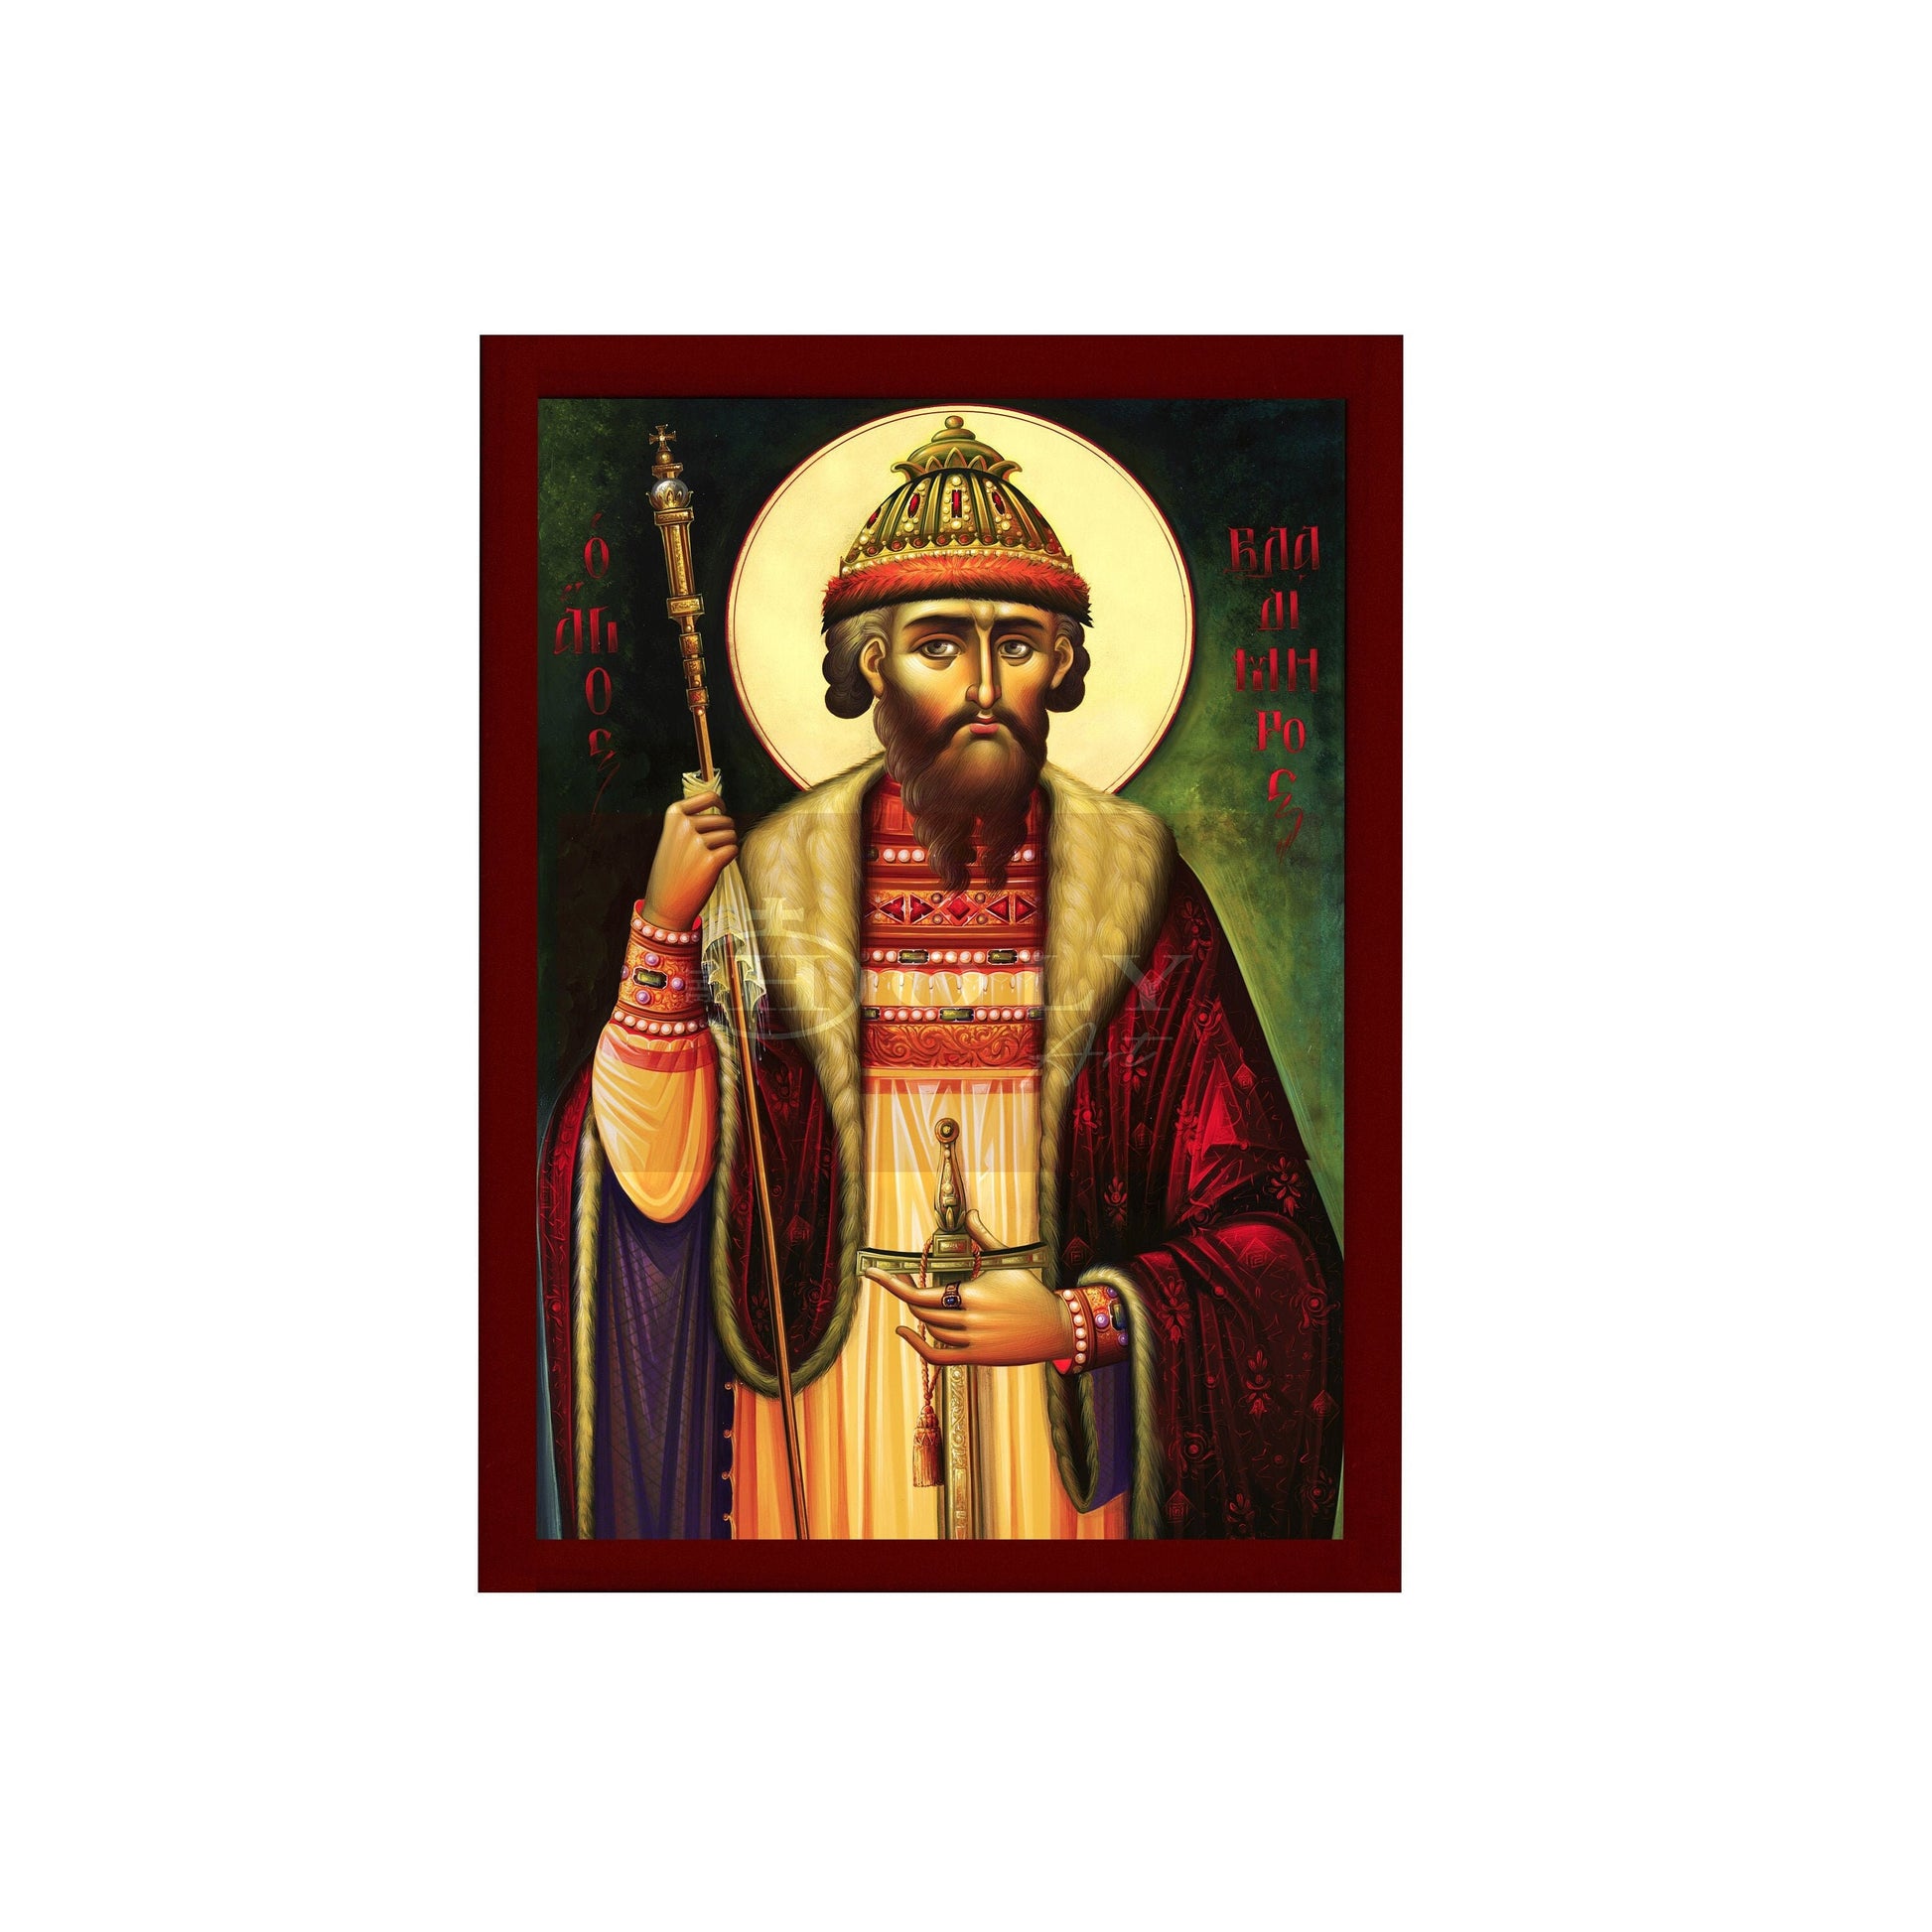 Saint Vladimir icon, Handmade Greek Orthodox icon of St Vladimir of Kiev, Byzantine art wall hanging icon wood plaque, religious decor TheHolyArt